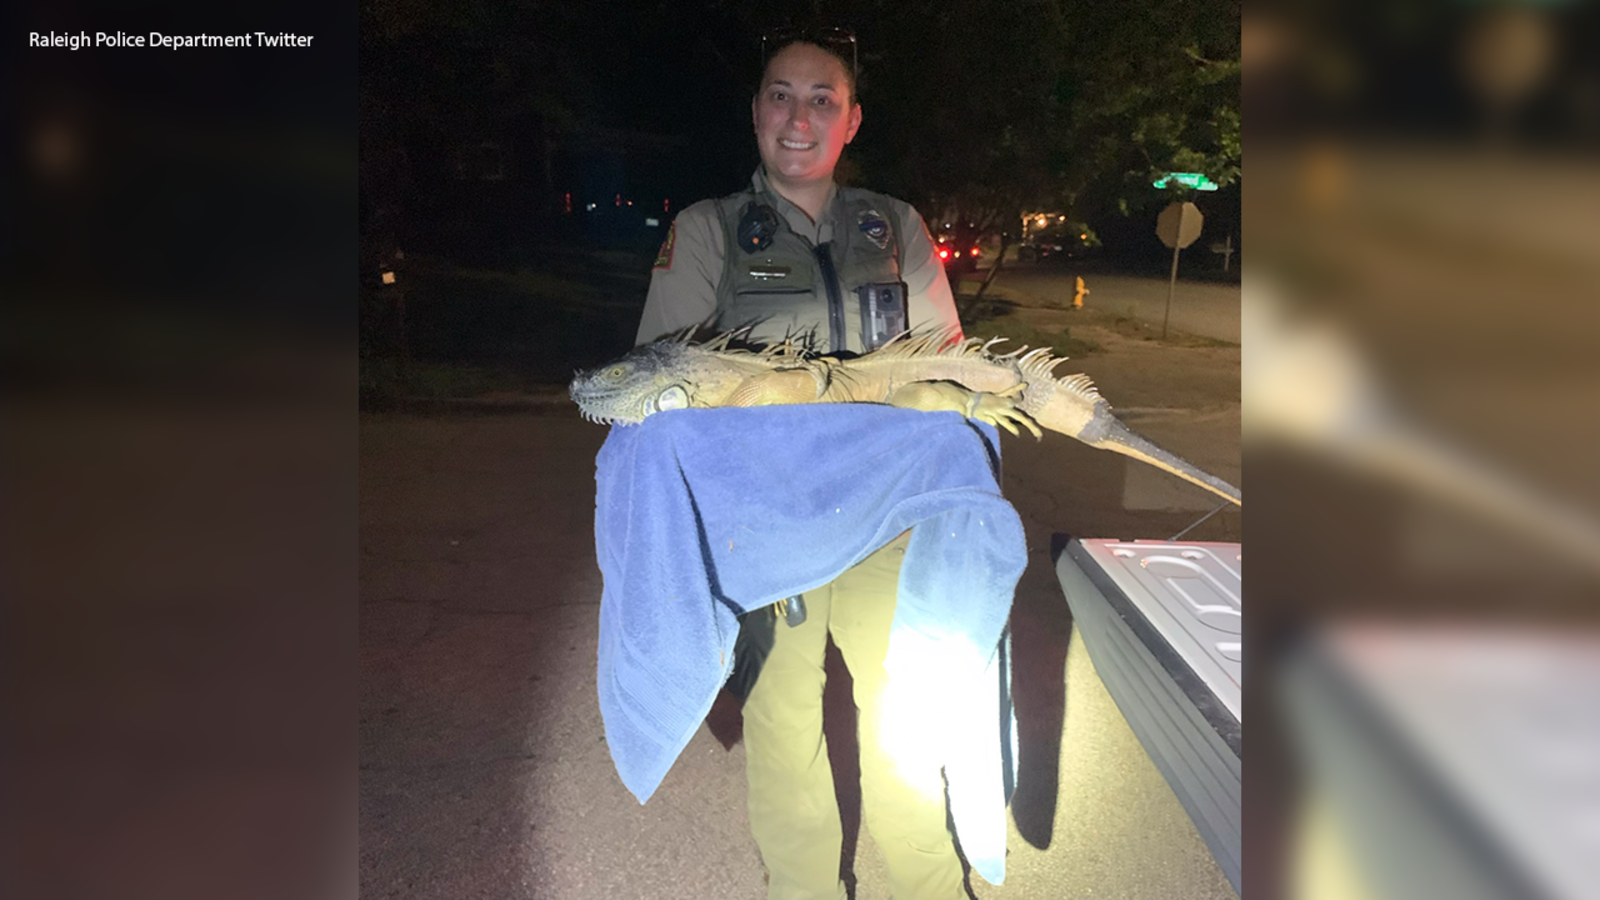 5-foot iguana caught roaming around Raleigh neighborhood